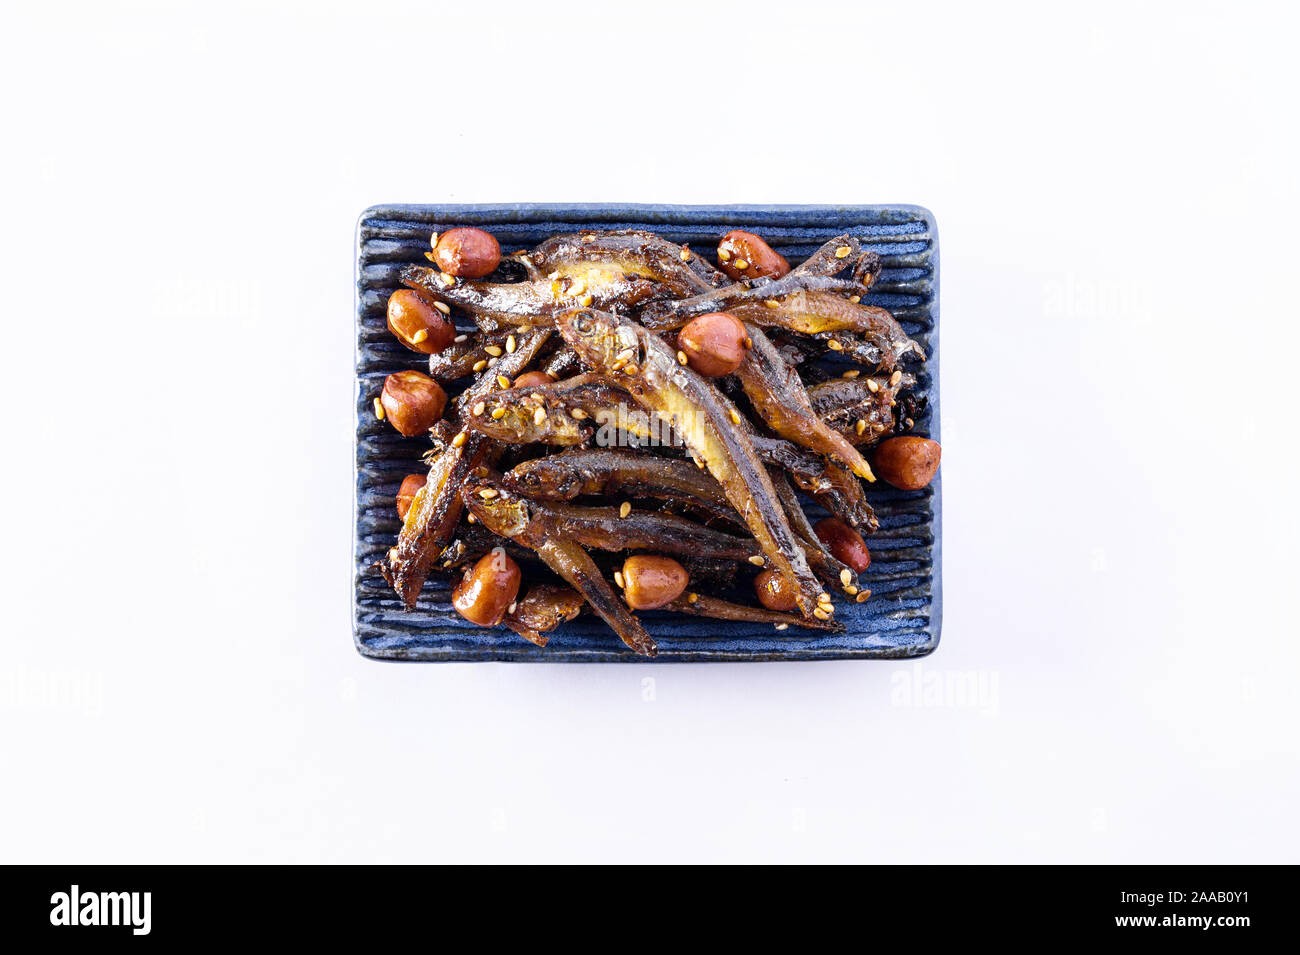 Tazukuri, candied sardines. Dried sardines lightly coated with honey, roasted sesame and peanuts. Stock Photo